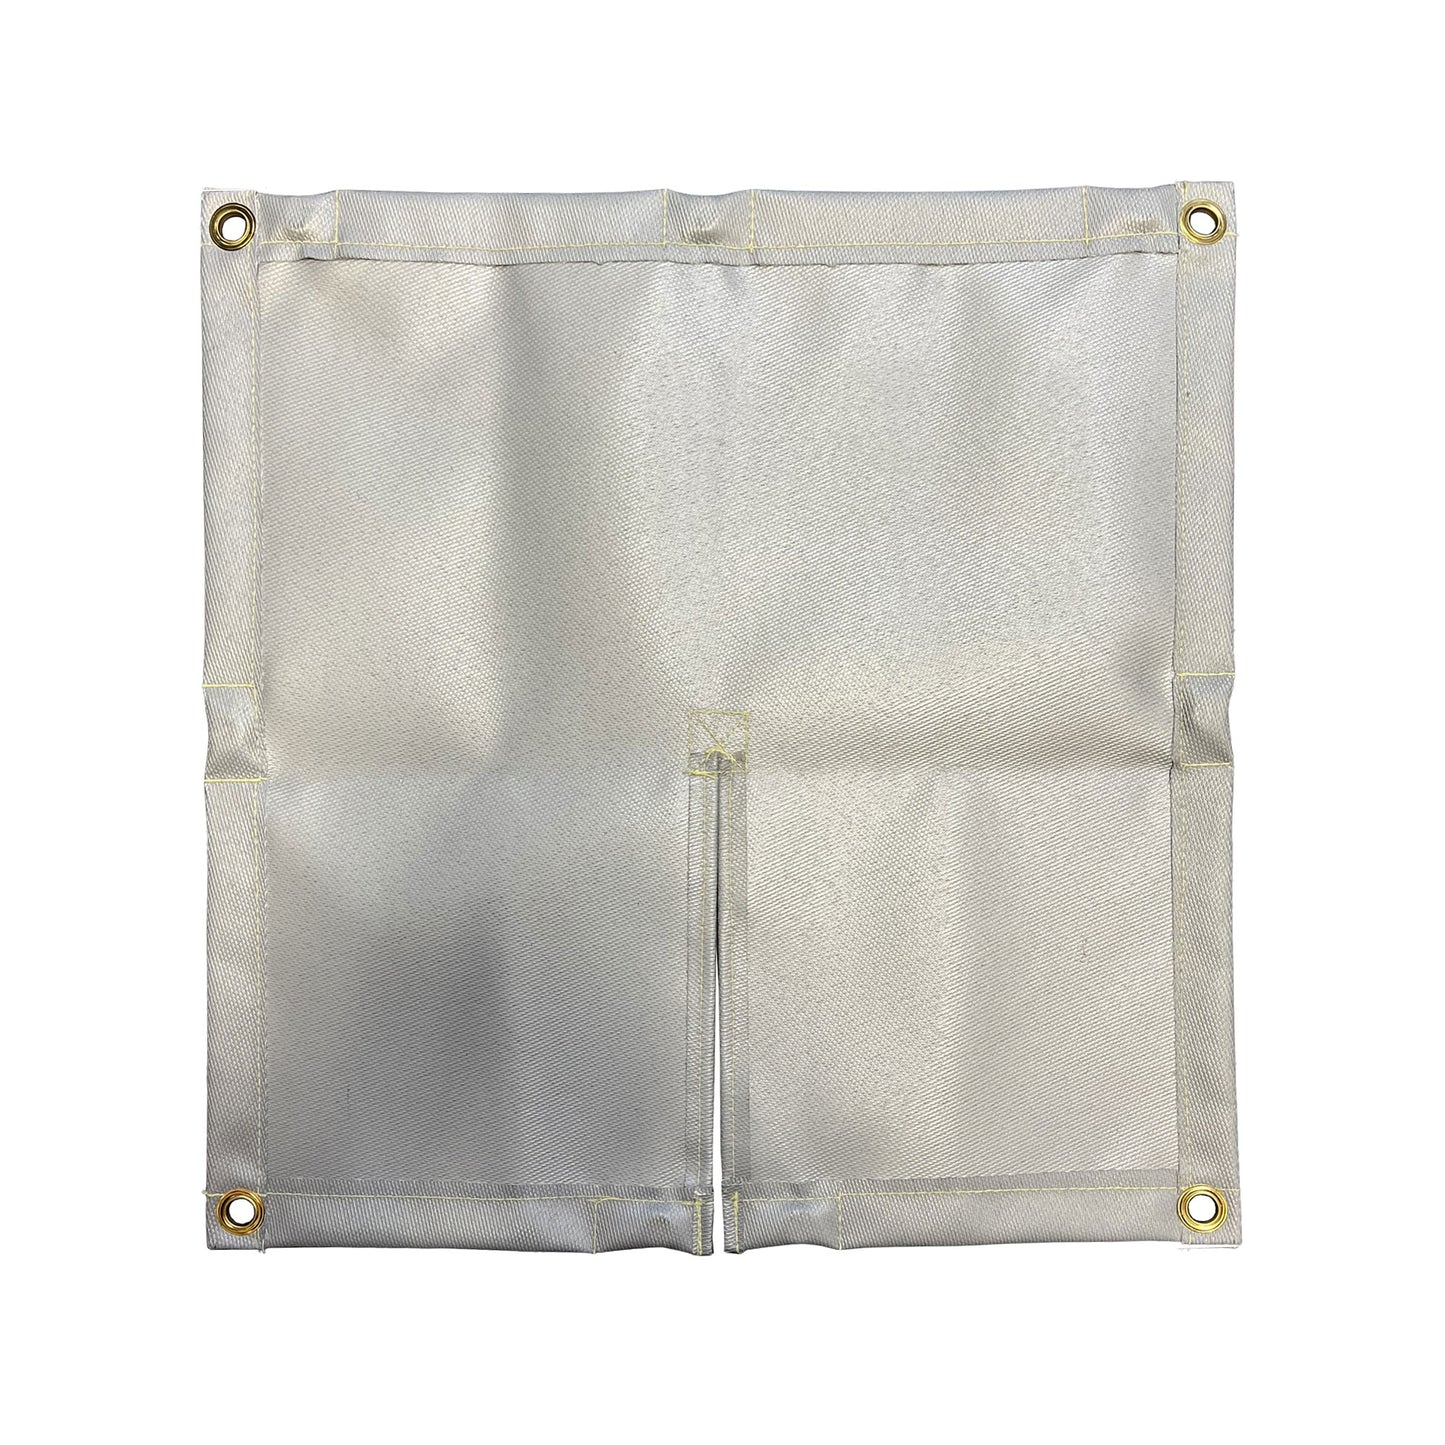 SW-MFRB - Flame Resistant Magnetic Blanket